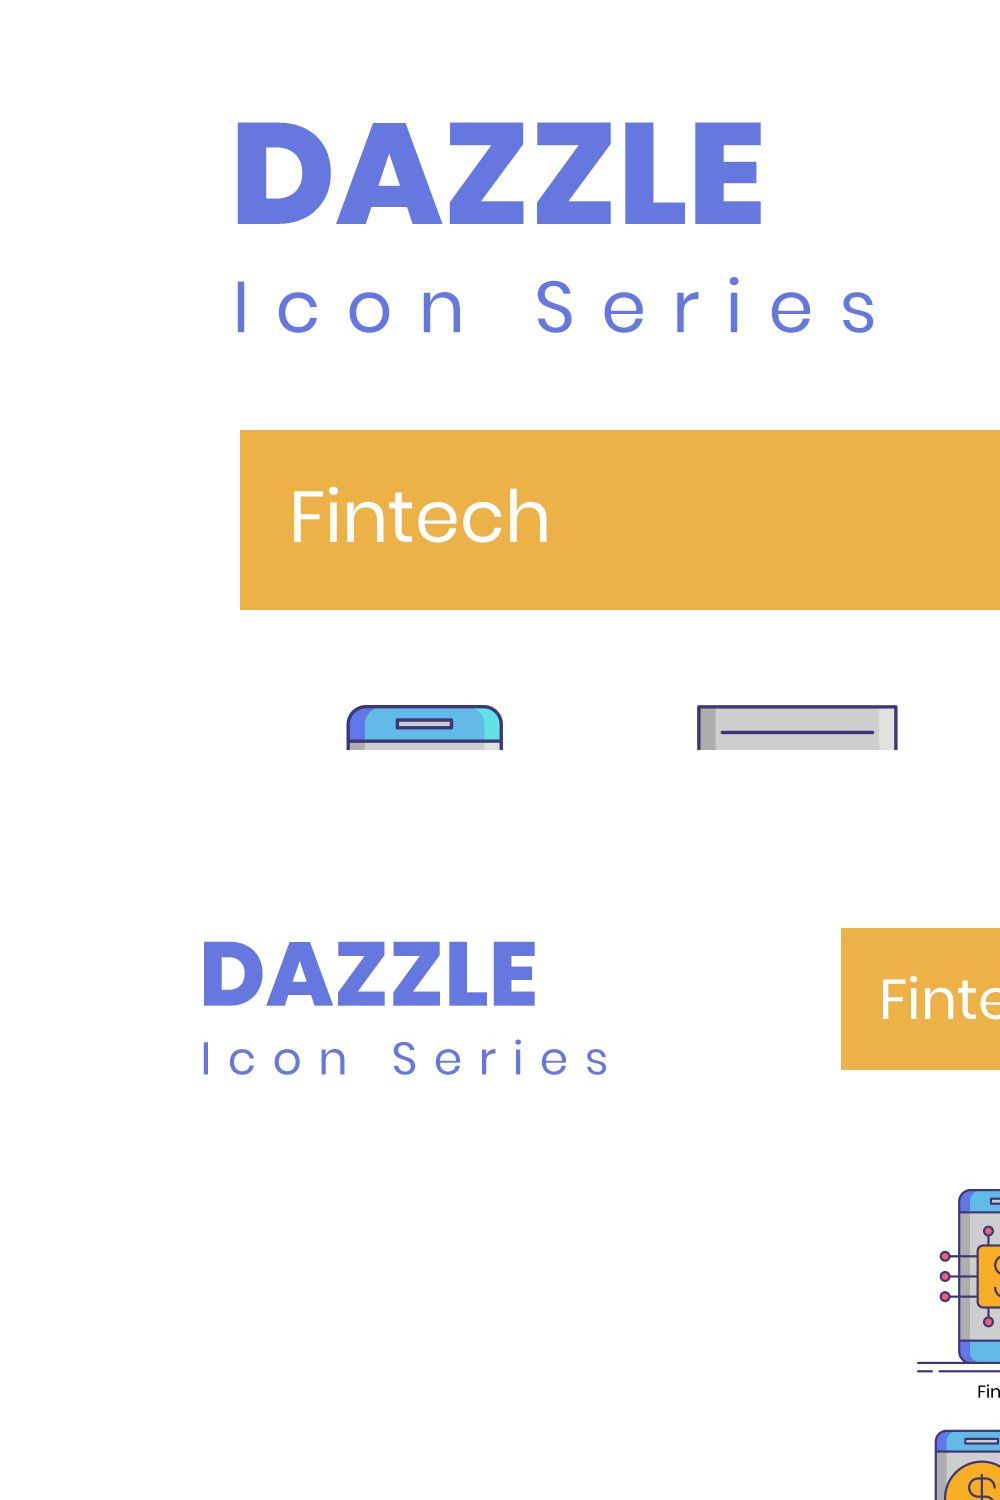 80 Fintech (V2021) Icons | Dazzle pinterest preview image.